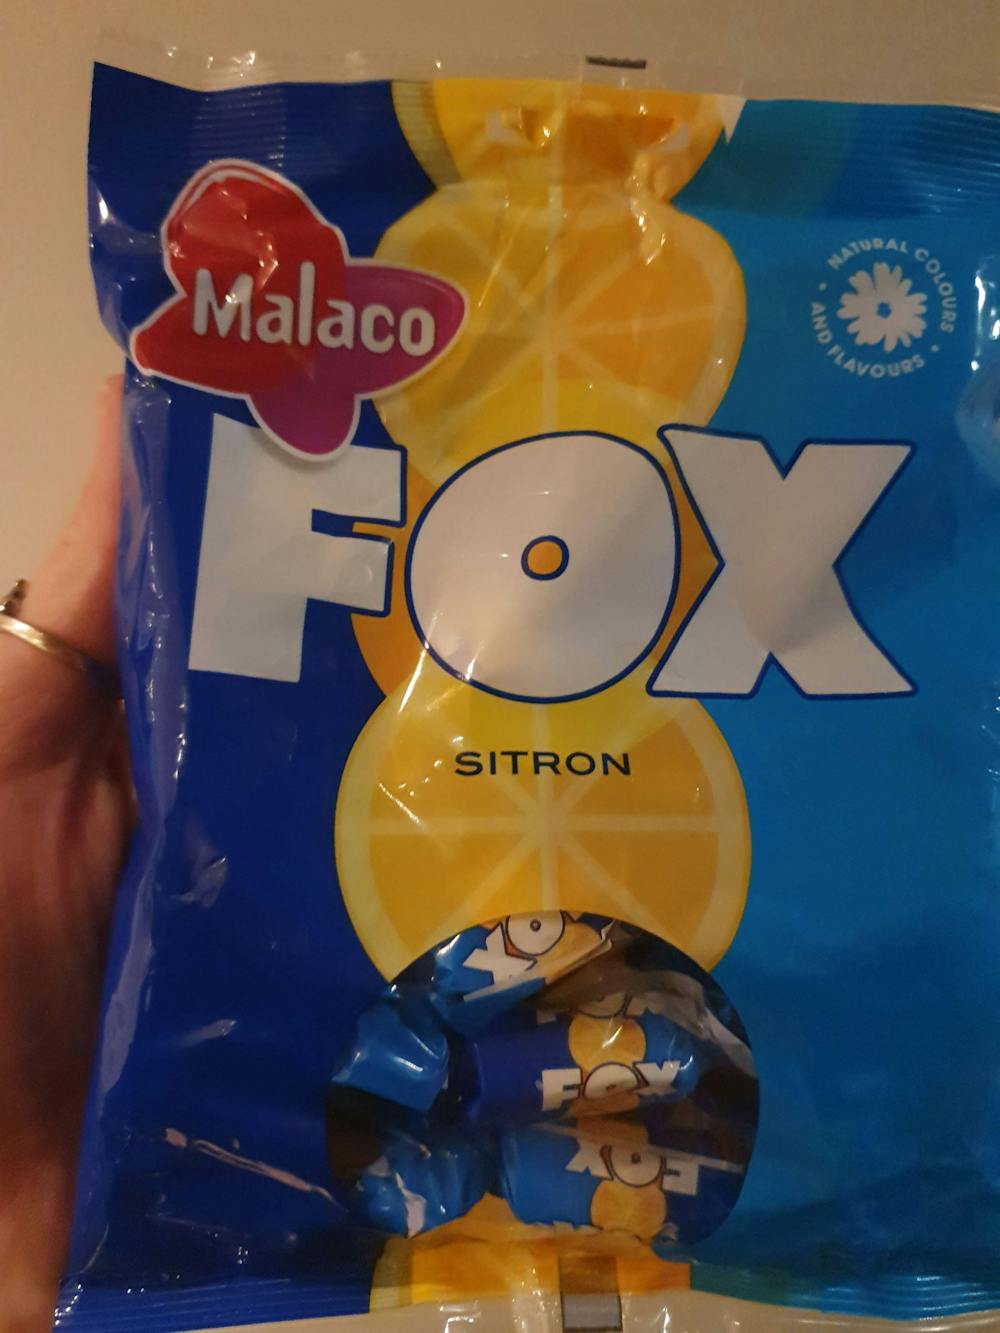 Fox sitron, Malaco